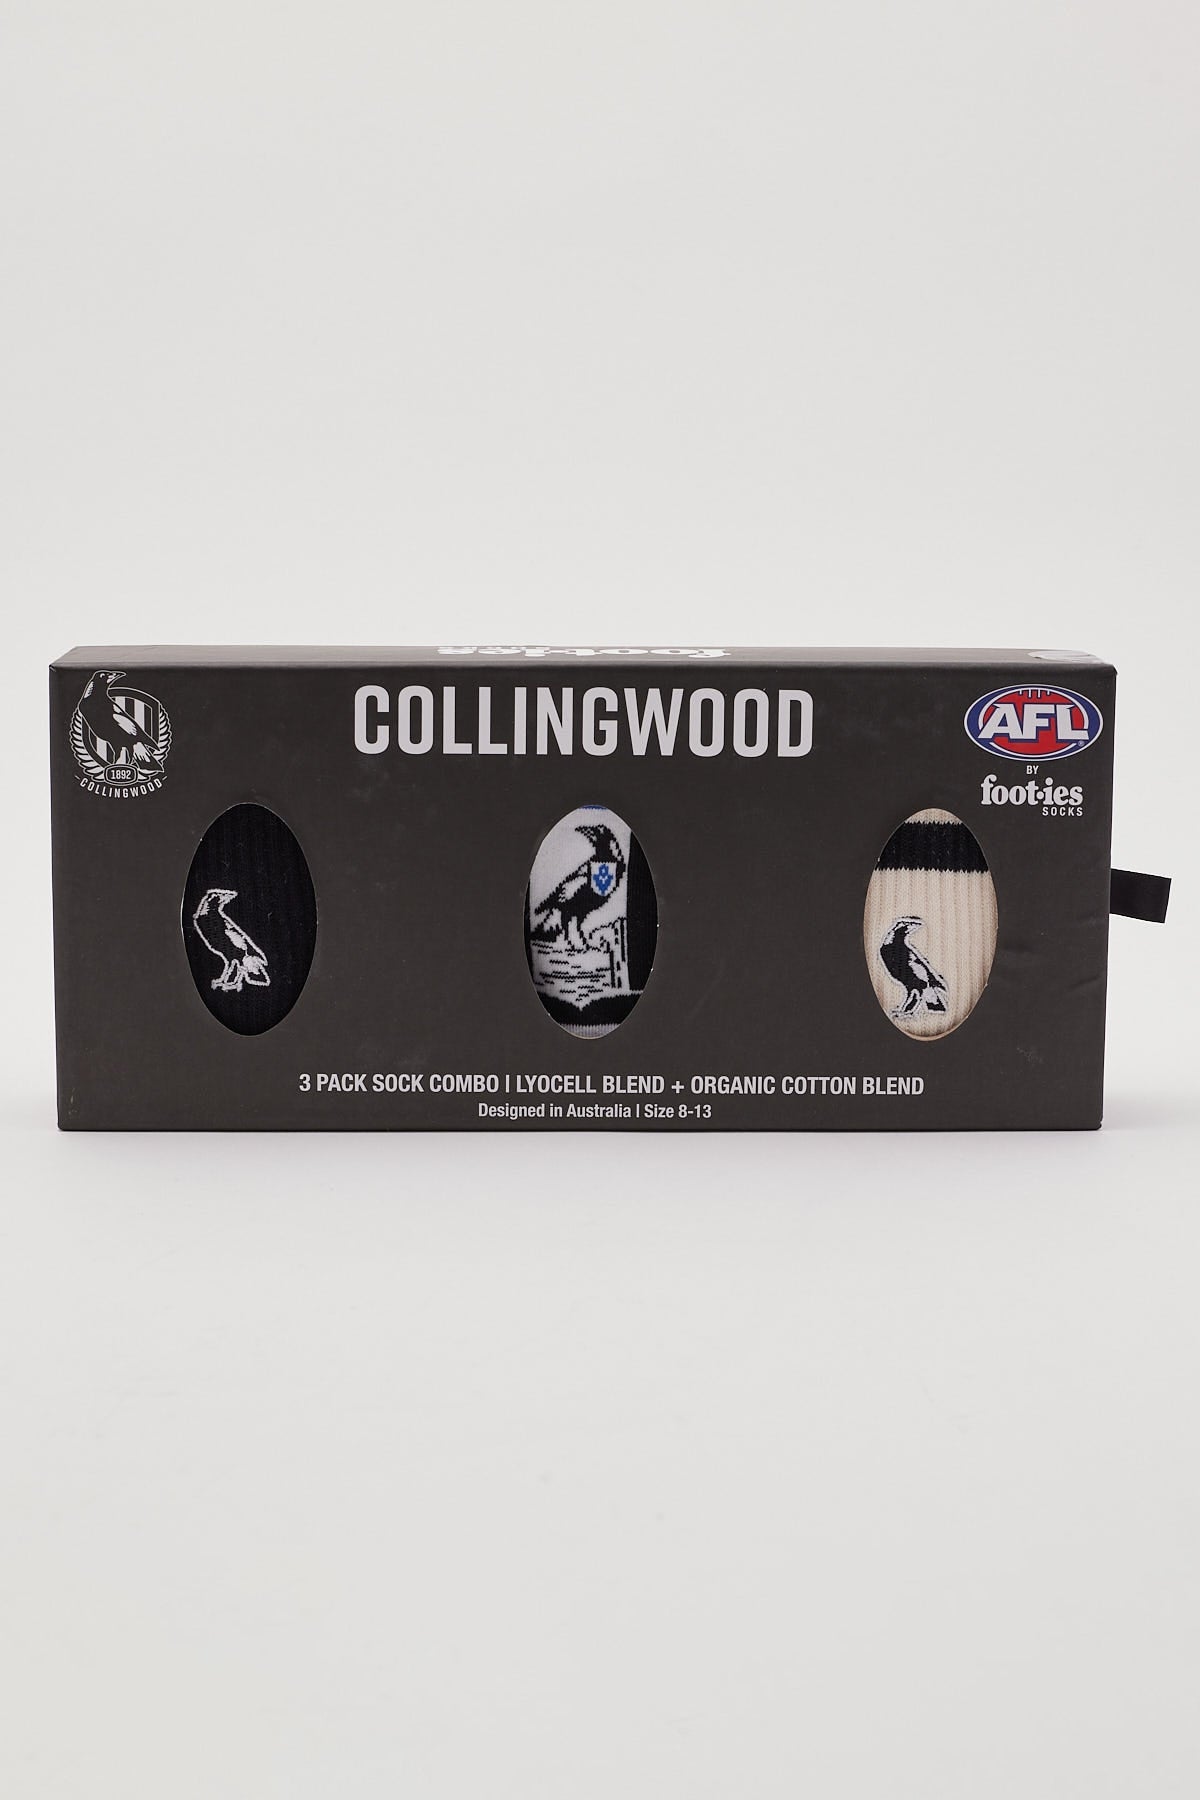 Footies Collingwood Magpies 3 Pack Combo Socks Gift Box Black